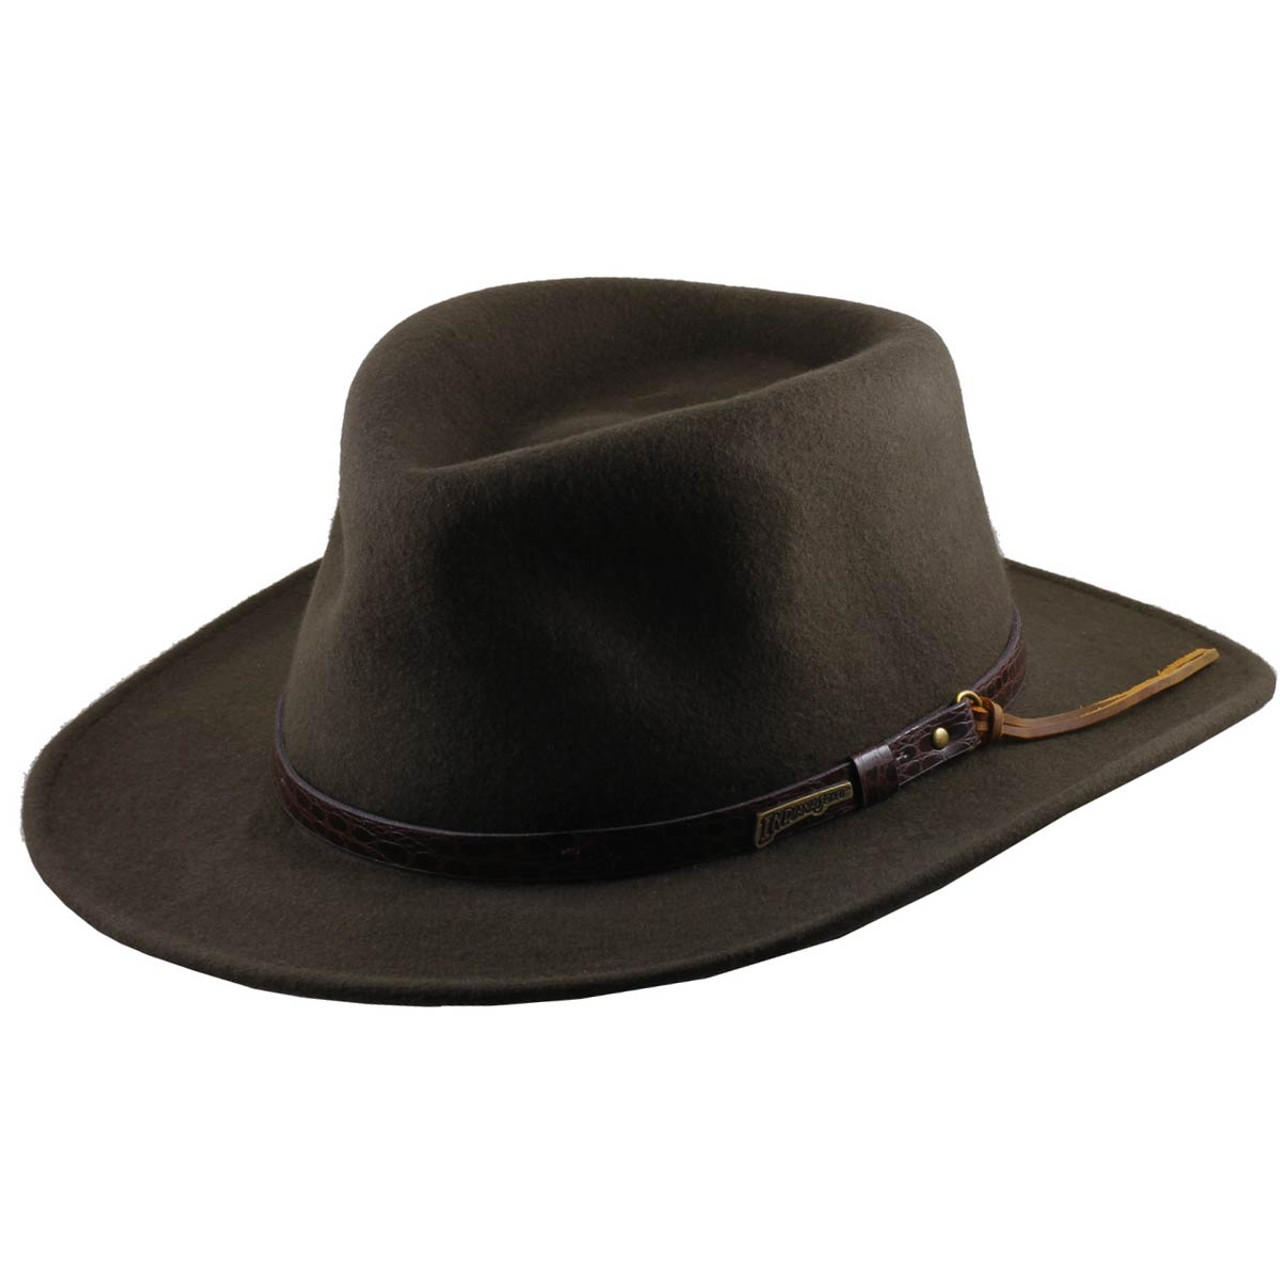 Indiana Jones Outback Felt Big 2xl & 3XL Hats